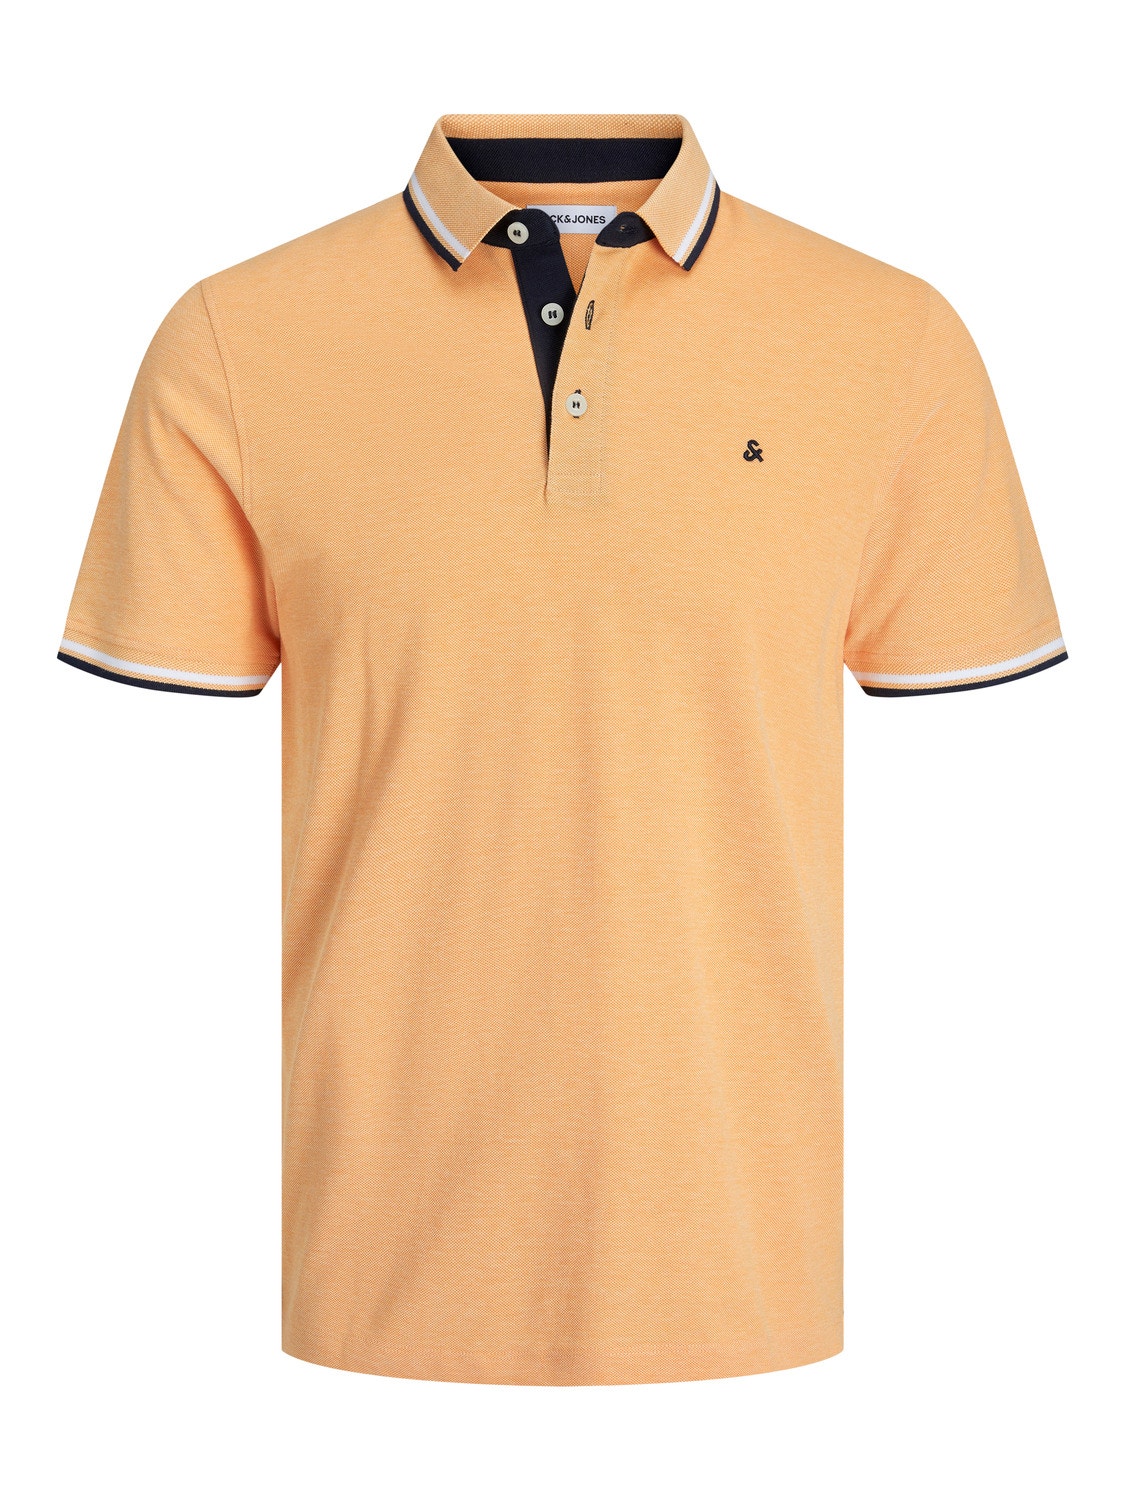 Jack & Jones Plus Size Vanlig T-skjorte -Apricot Ice  - 12143859